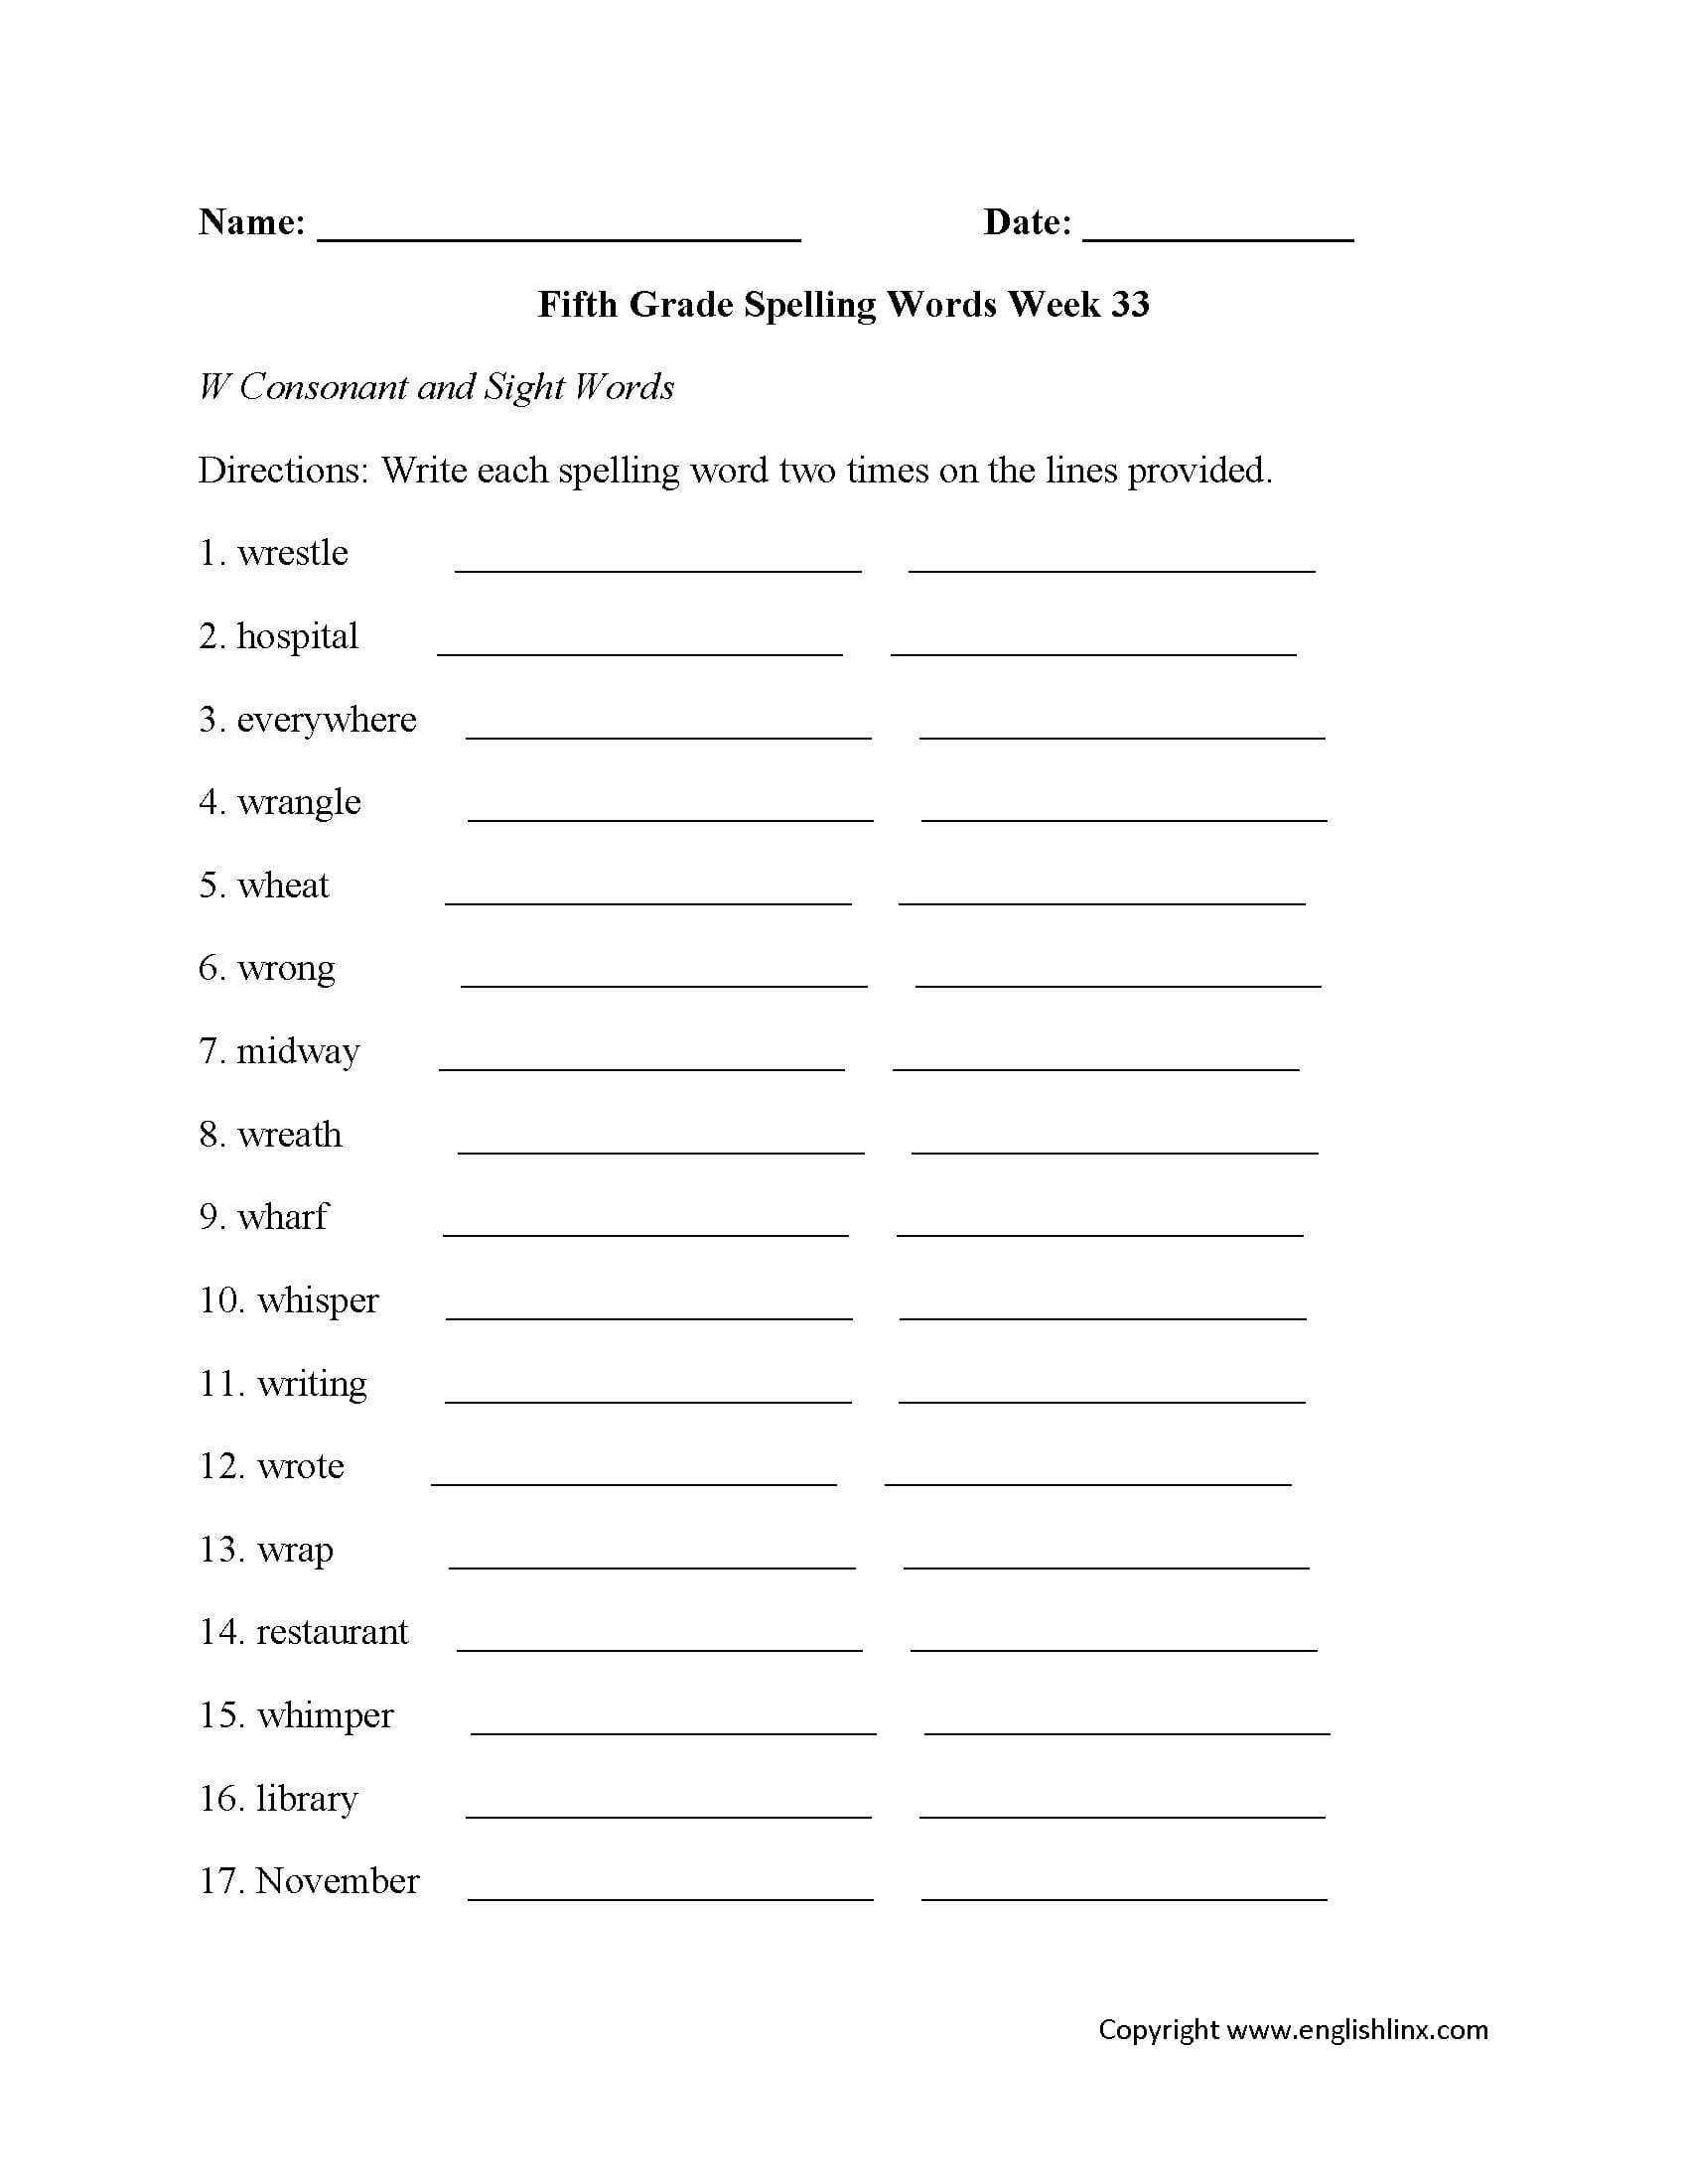 Spelling Worksheets  Fifth Grade Spelling Worksheets And 2Nd Grade Spelling Worksheets Pdf